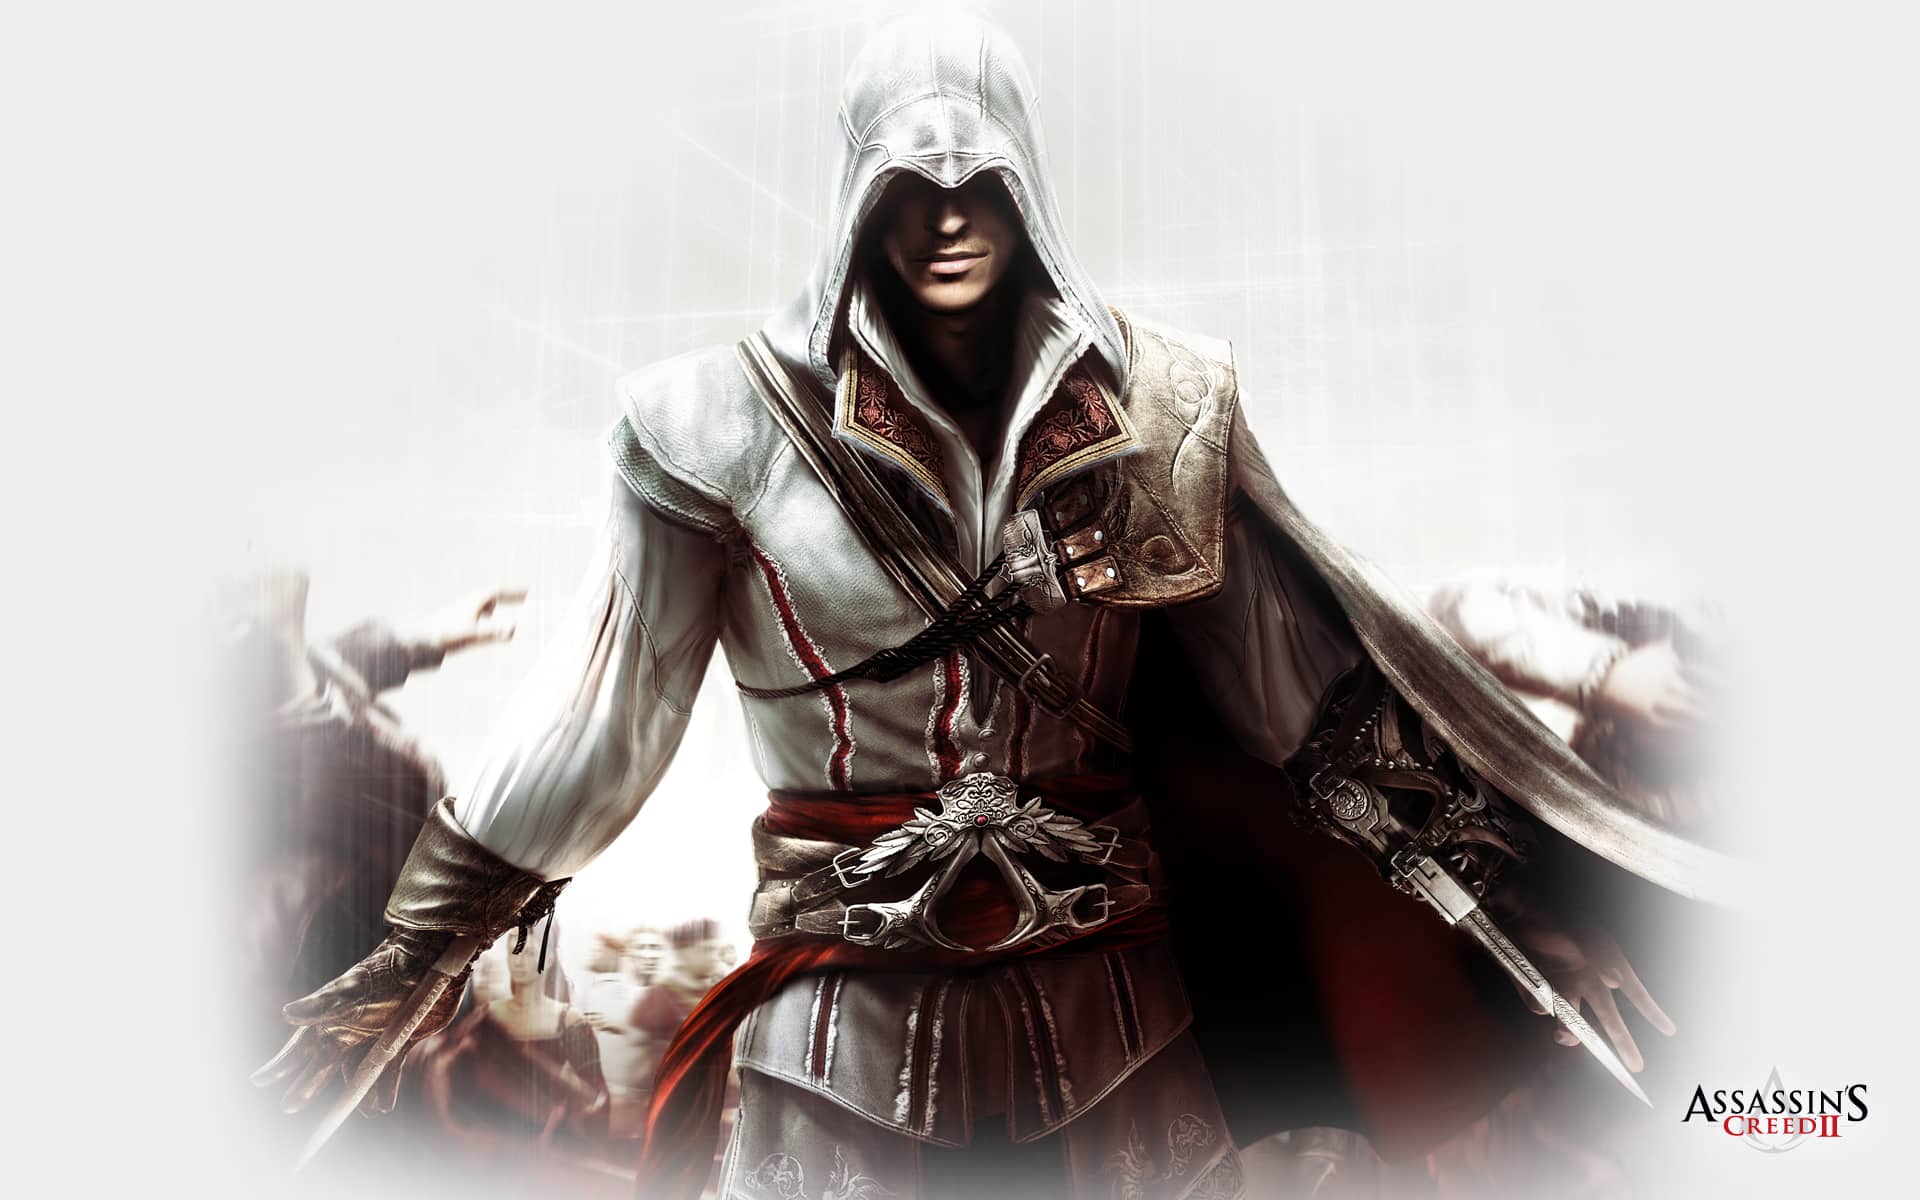 Assassins Creed 2 wallpaper - Video Games Blogger